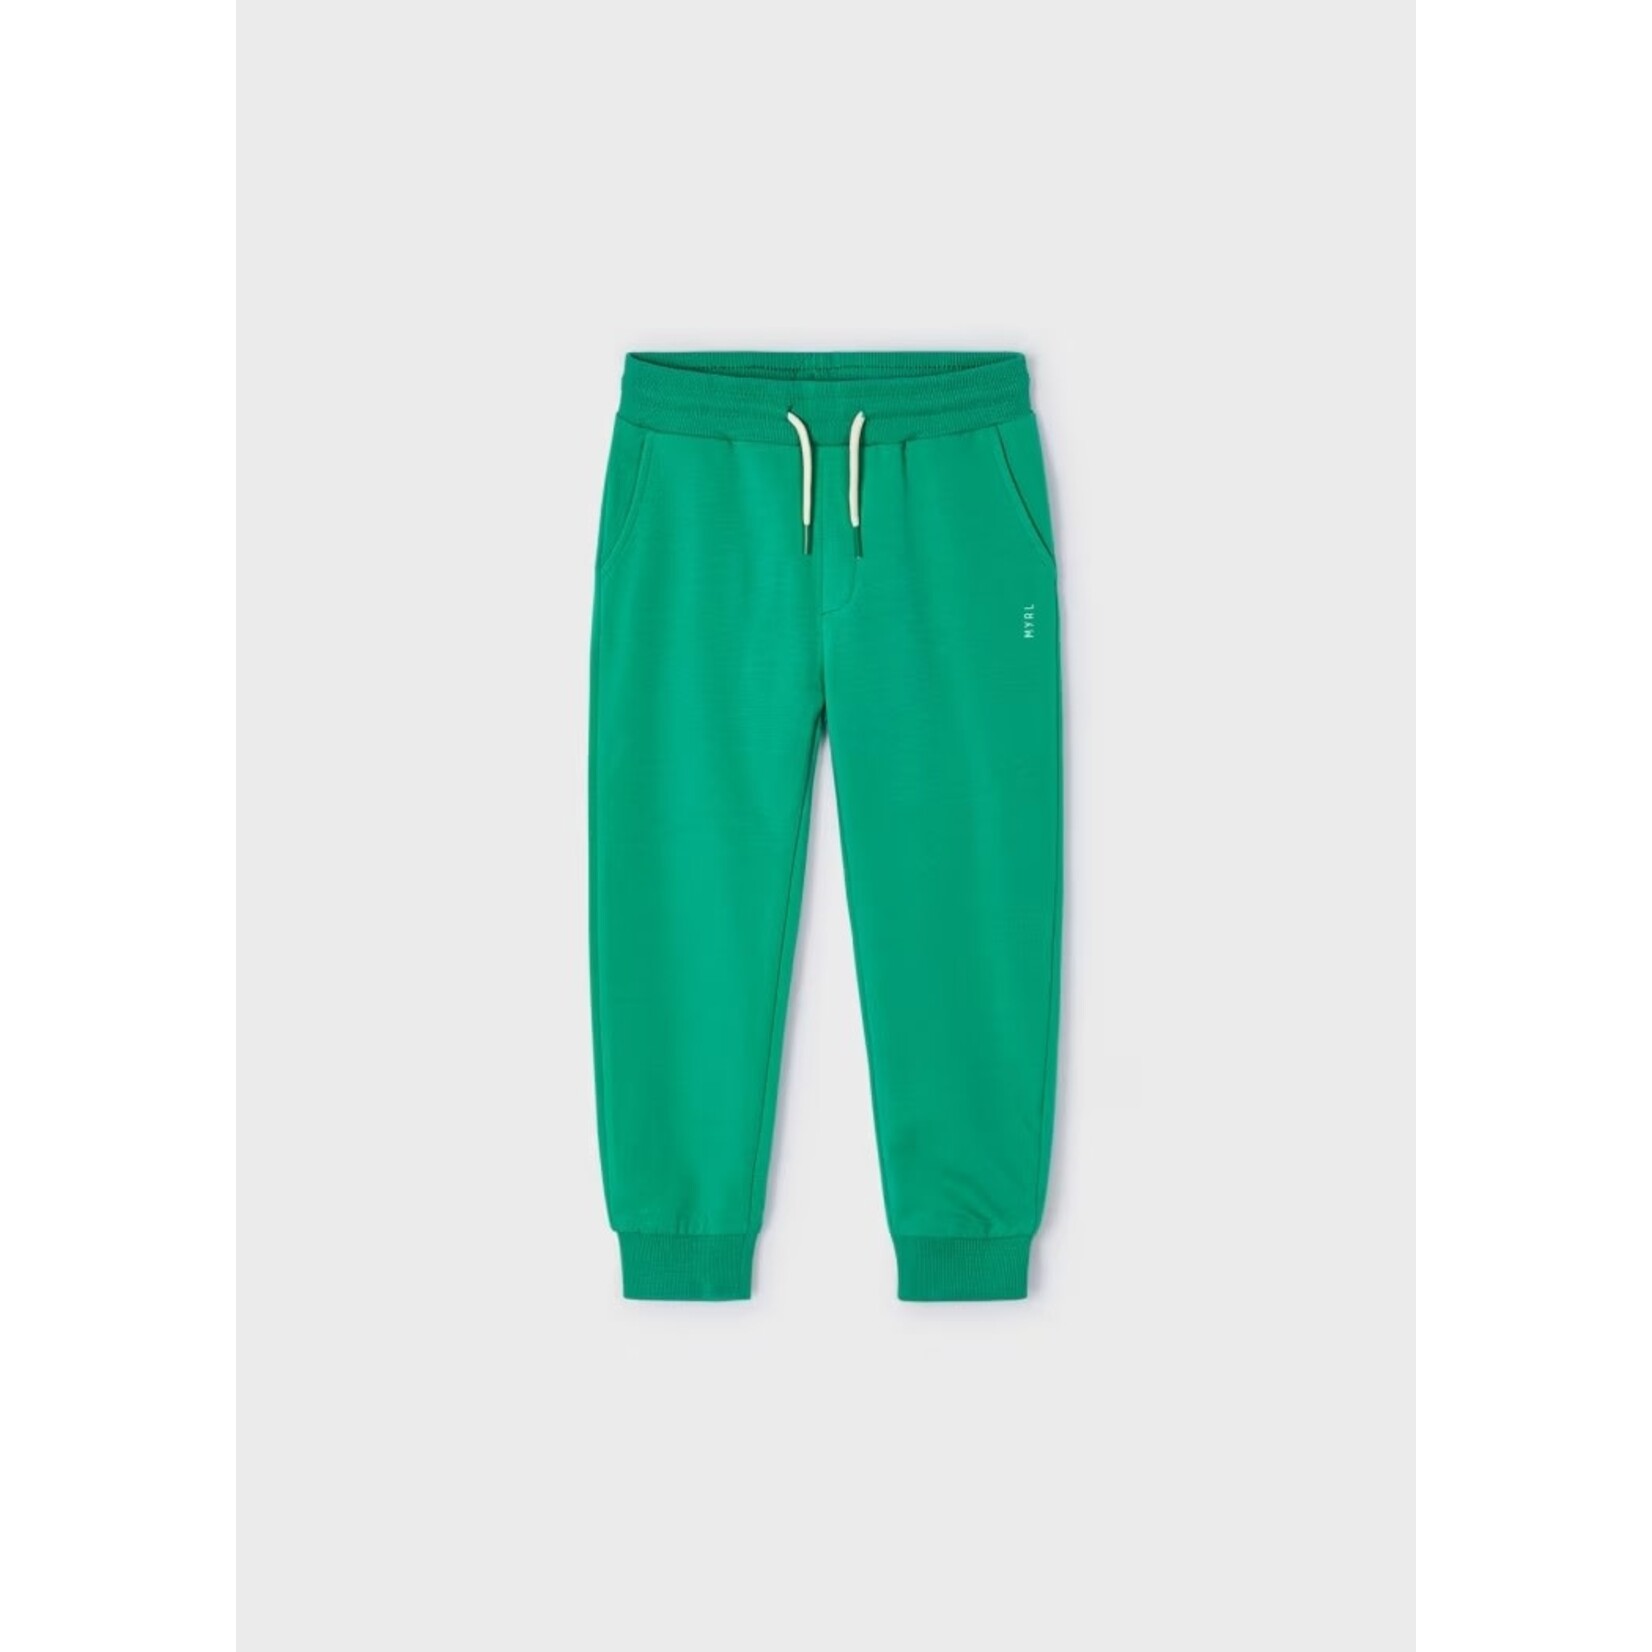 Mayoral MAYORAL - Pantalon jogging souple vert chlorophylle avec cordon ajustable